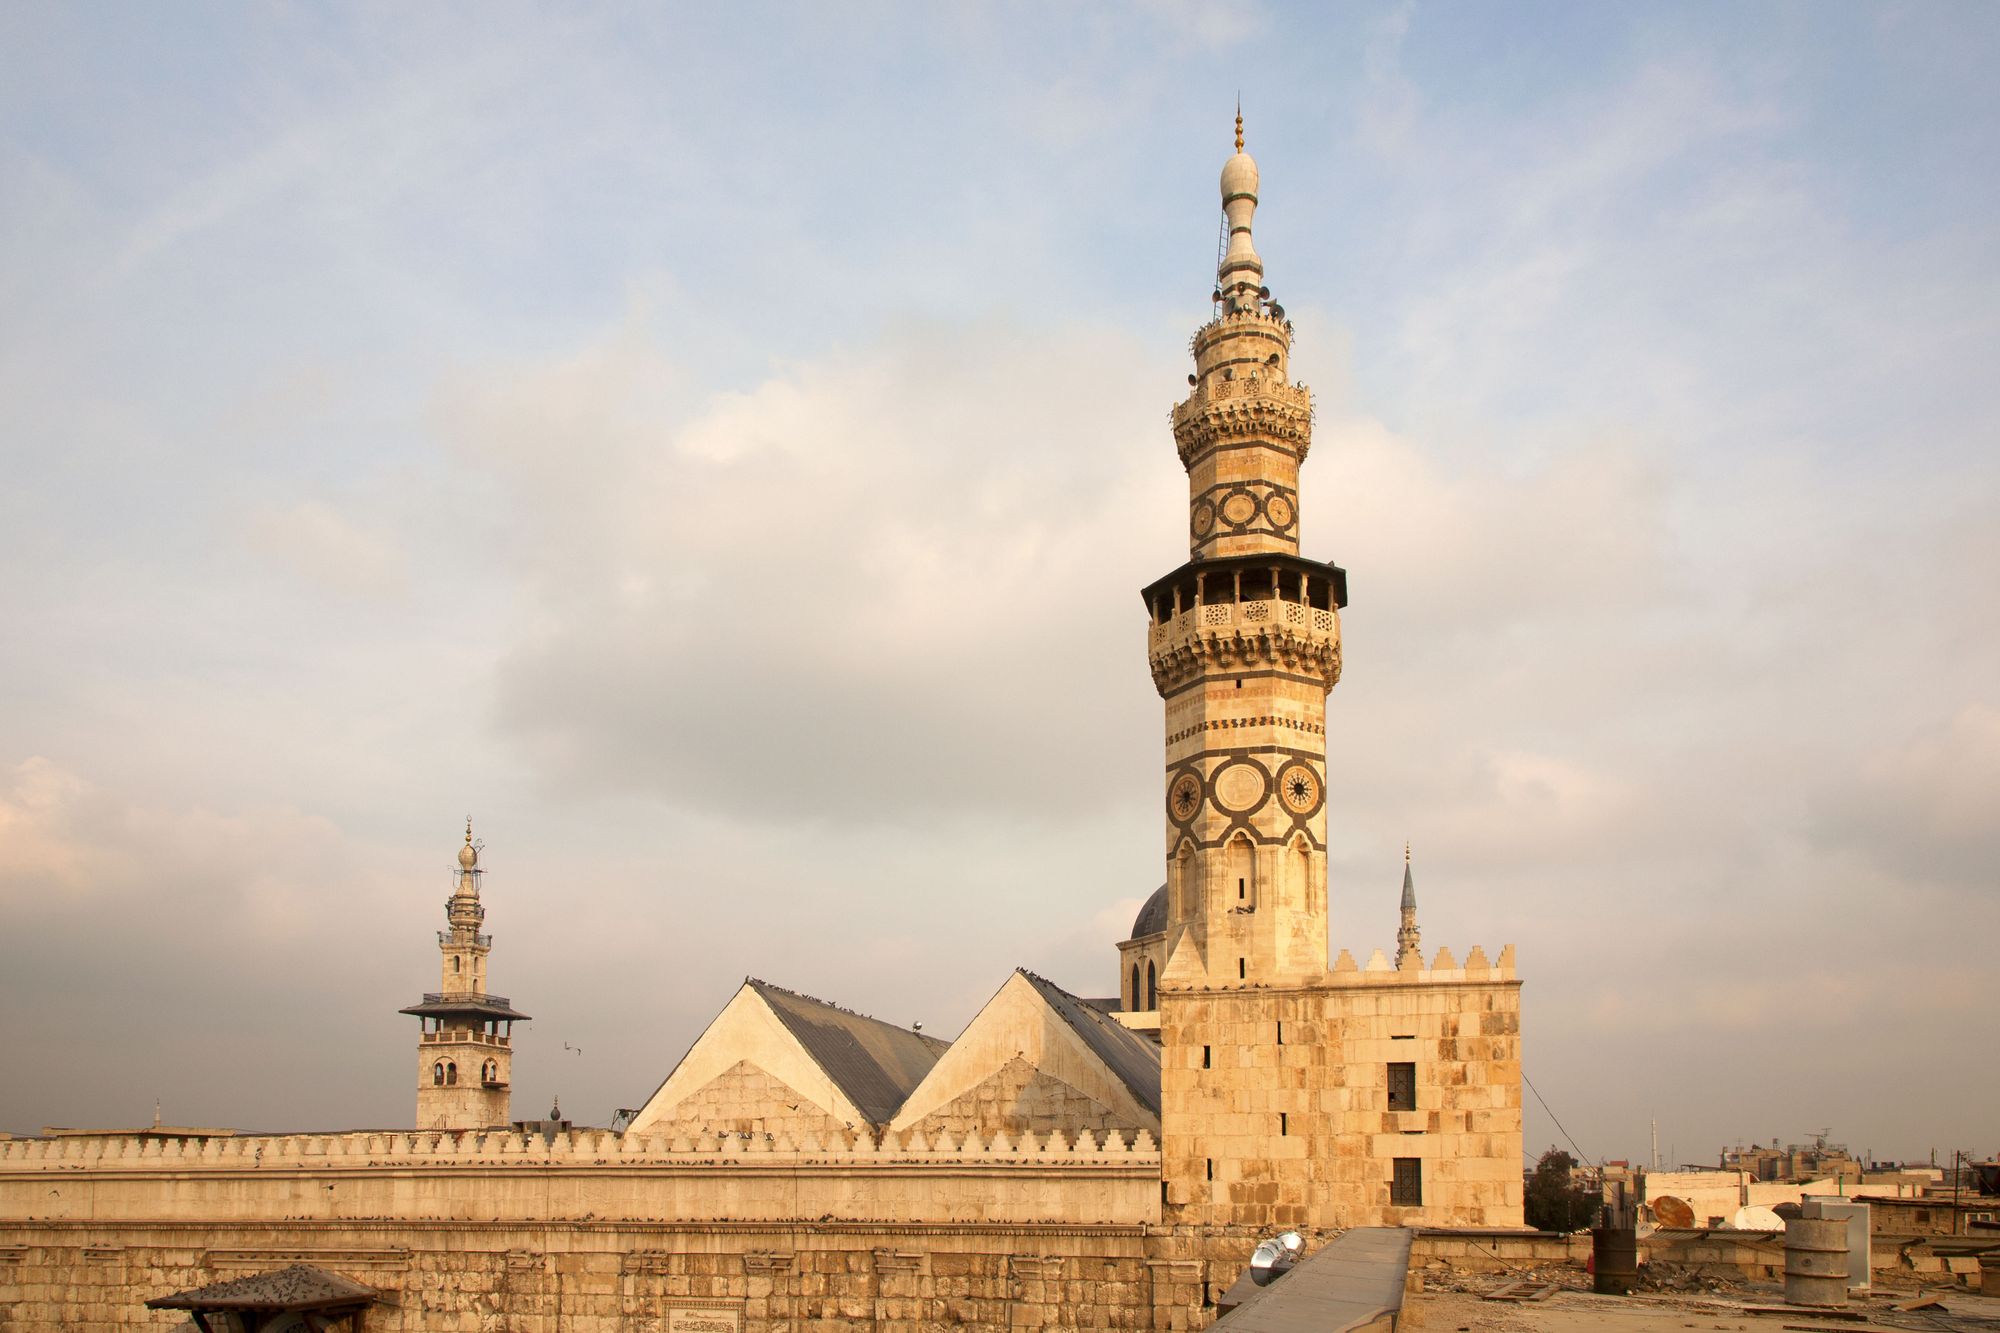 Minarets of the Umayyad Mosque